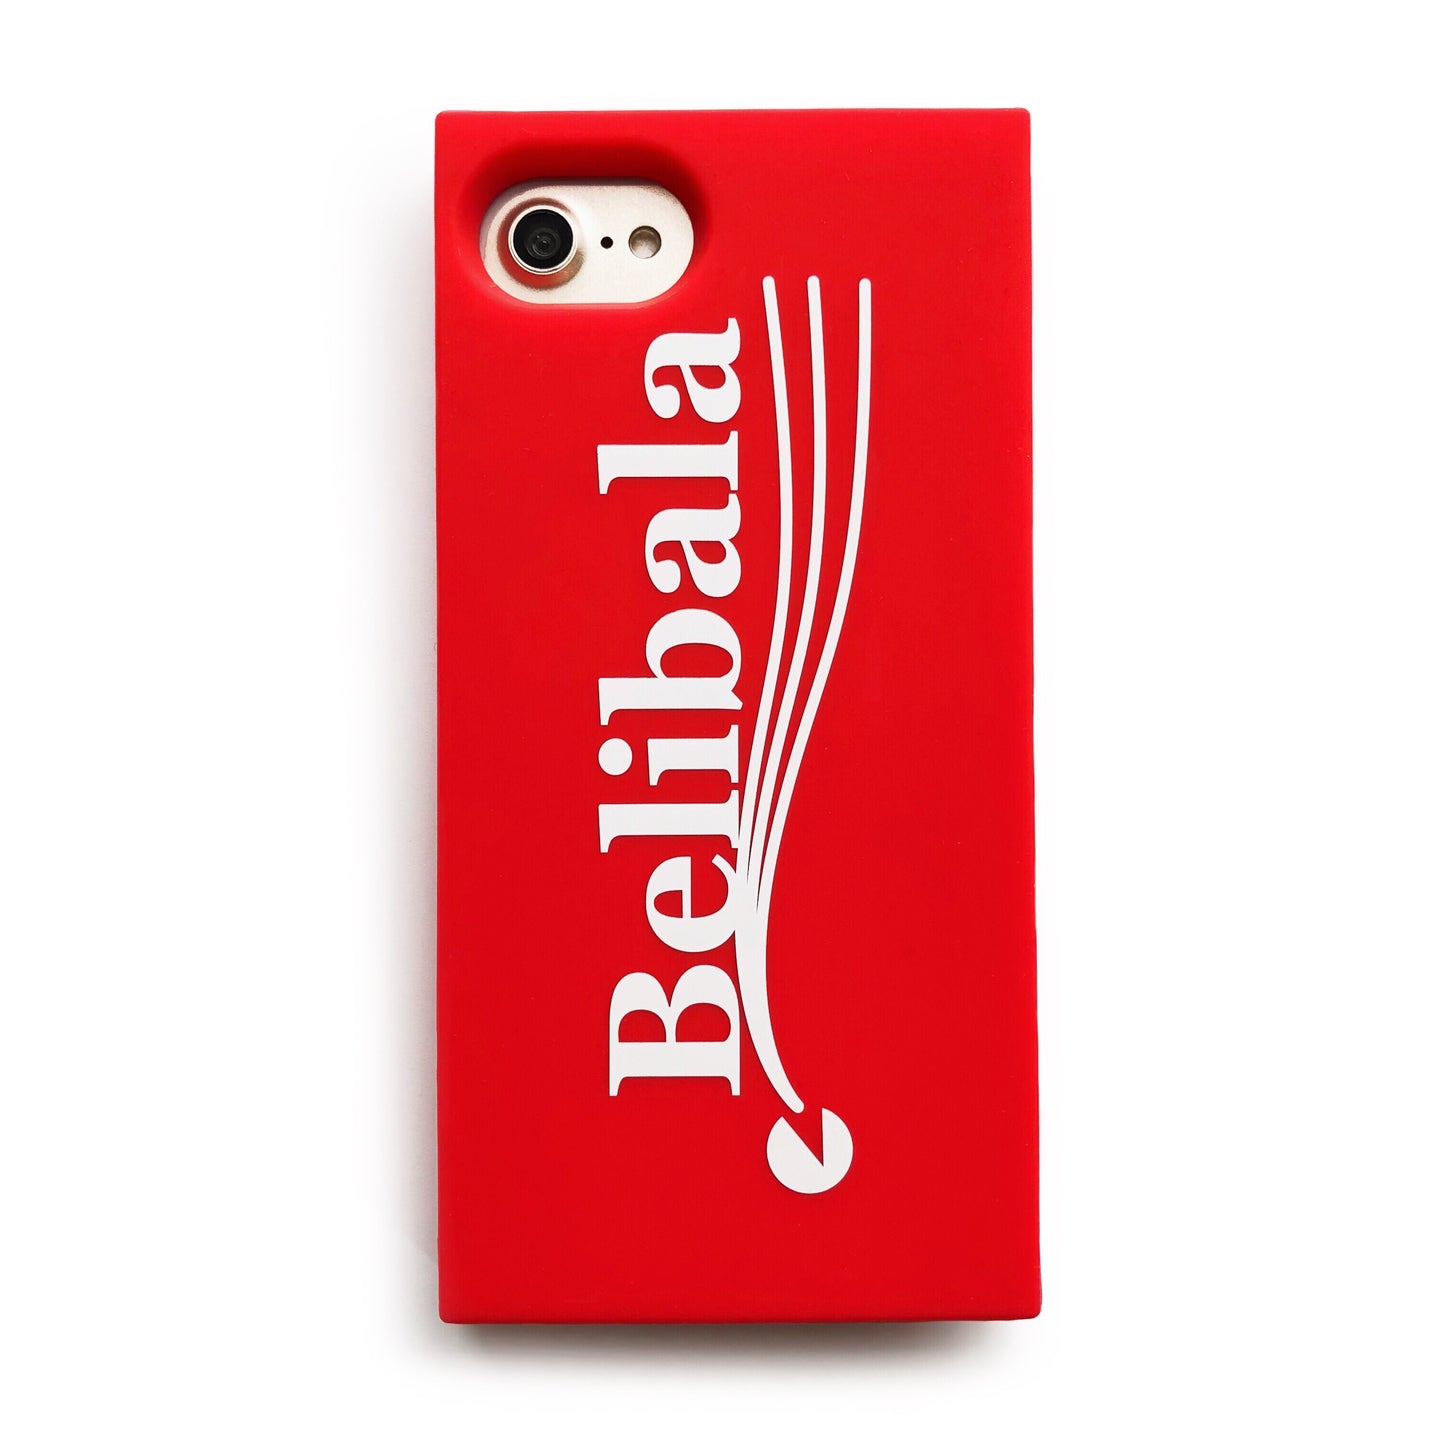 iPhone SE/7/8 Simple Case - Belibala (Red)